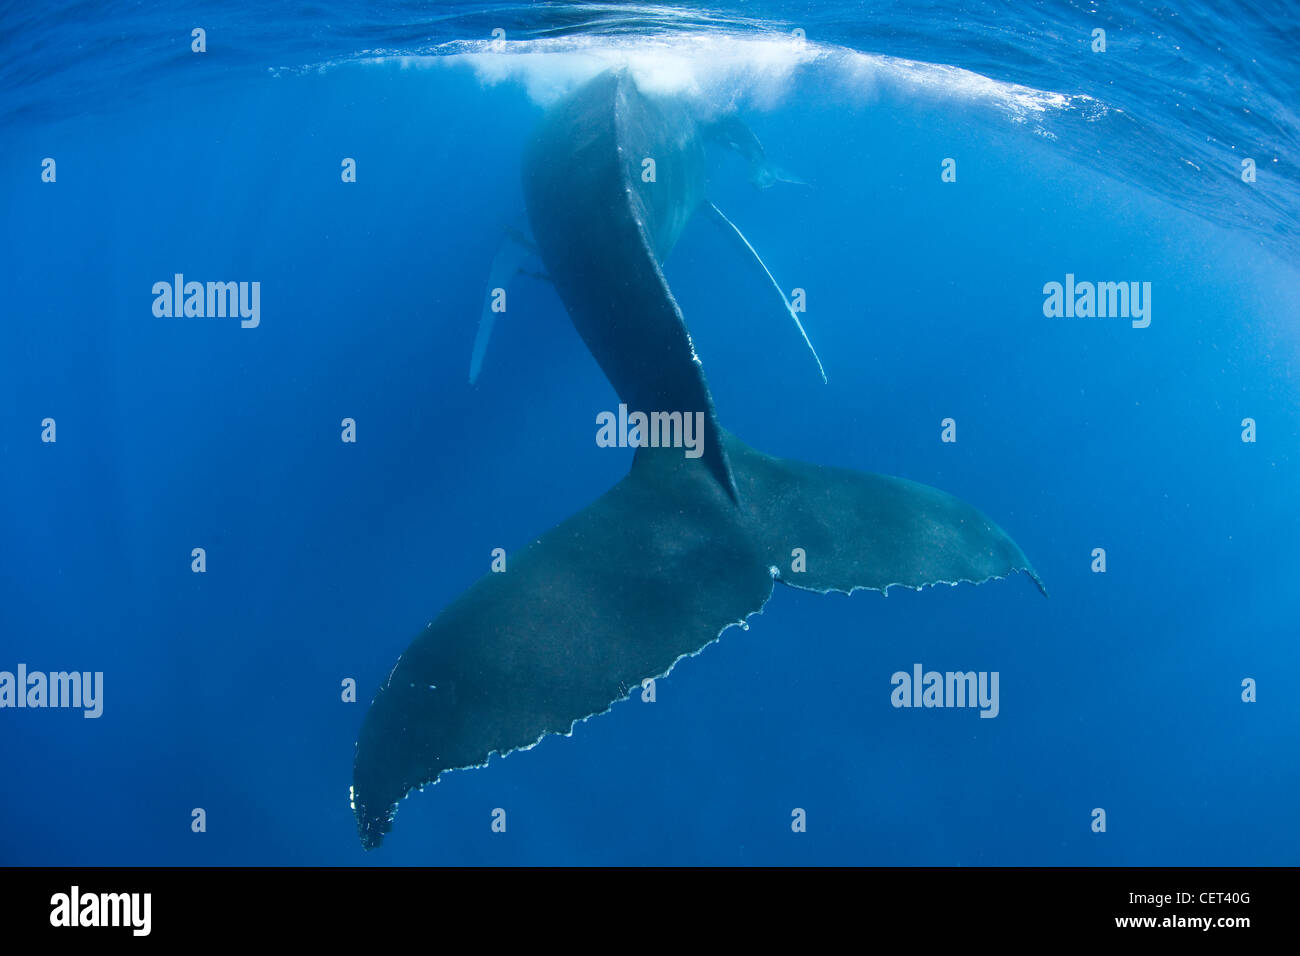 Un completo crecido ballena jorobada, Megaptera novaeangliae, superficies para respirar. La ballena de Fluke es de casi 14 metros de ancho. Foto de stock